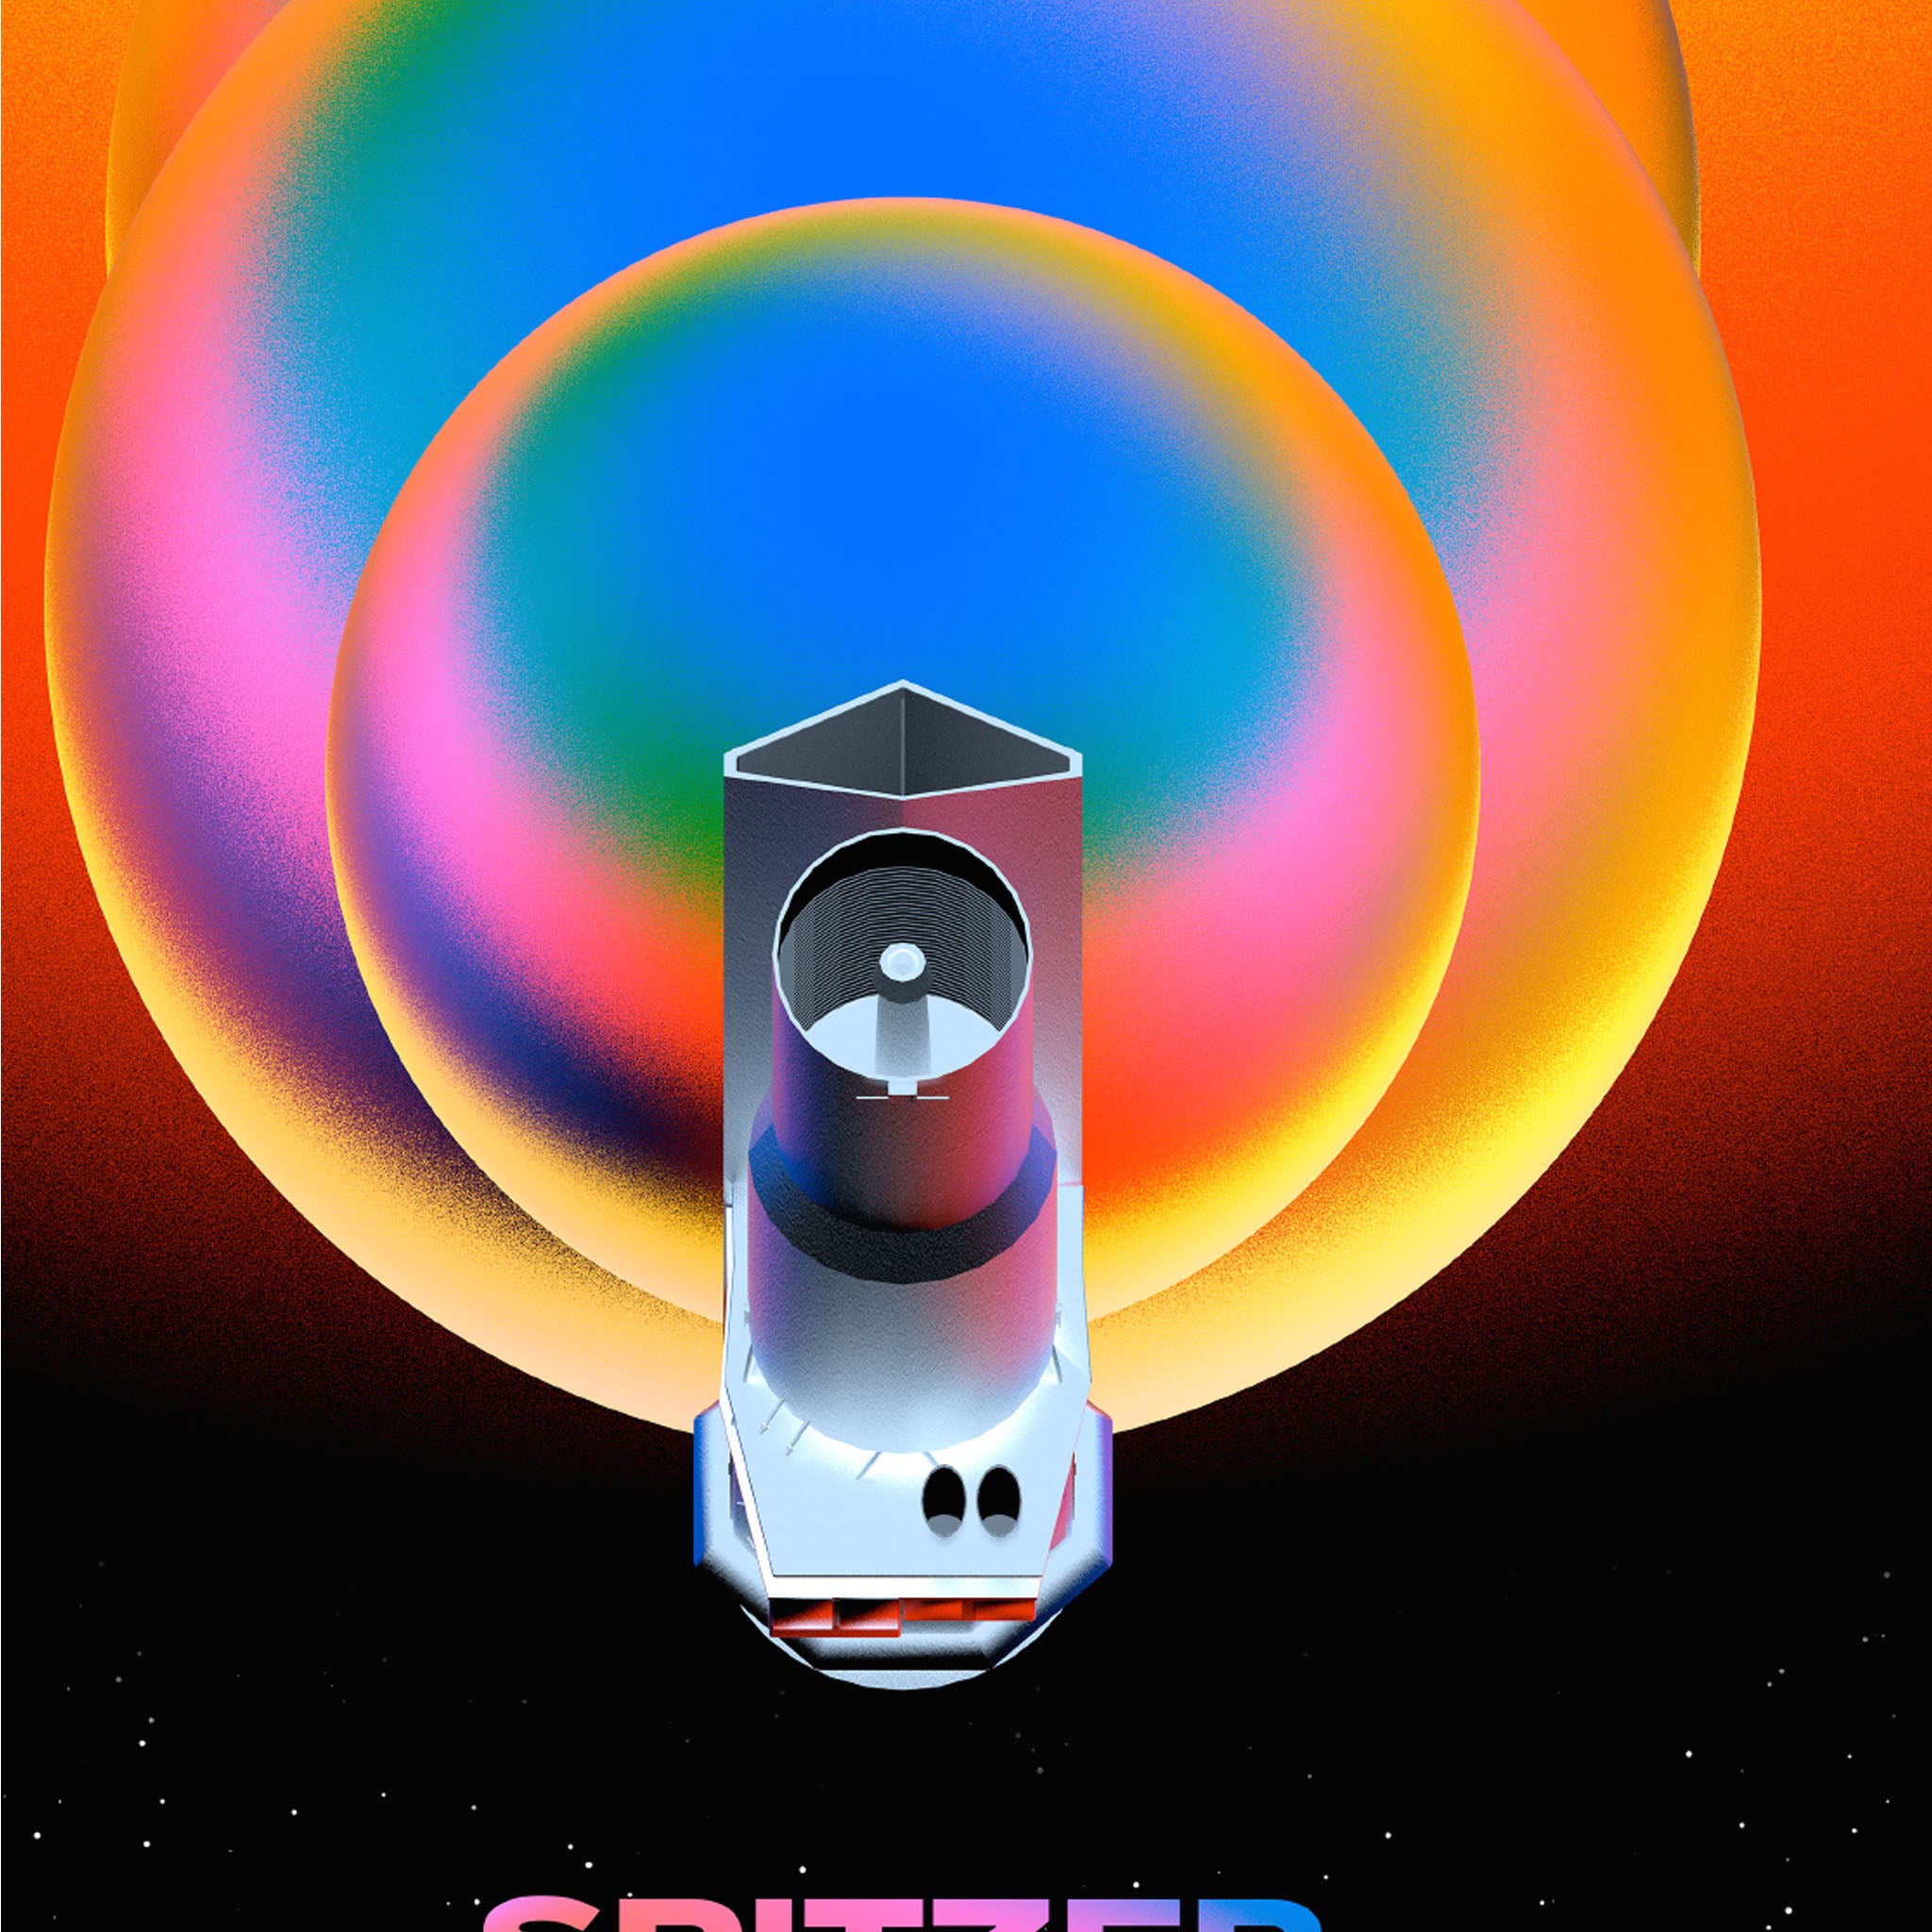 Spitzer - NASA Poster